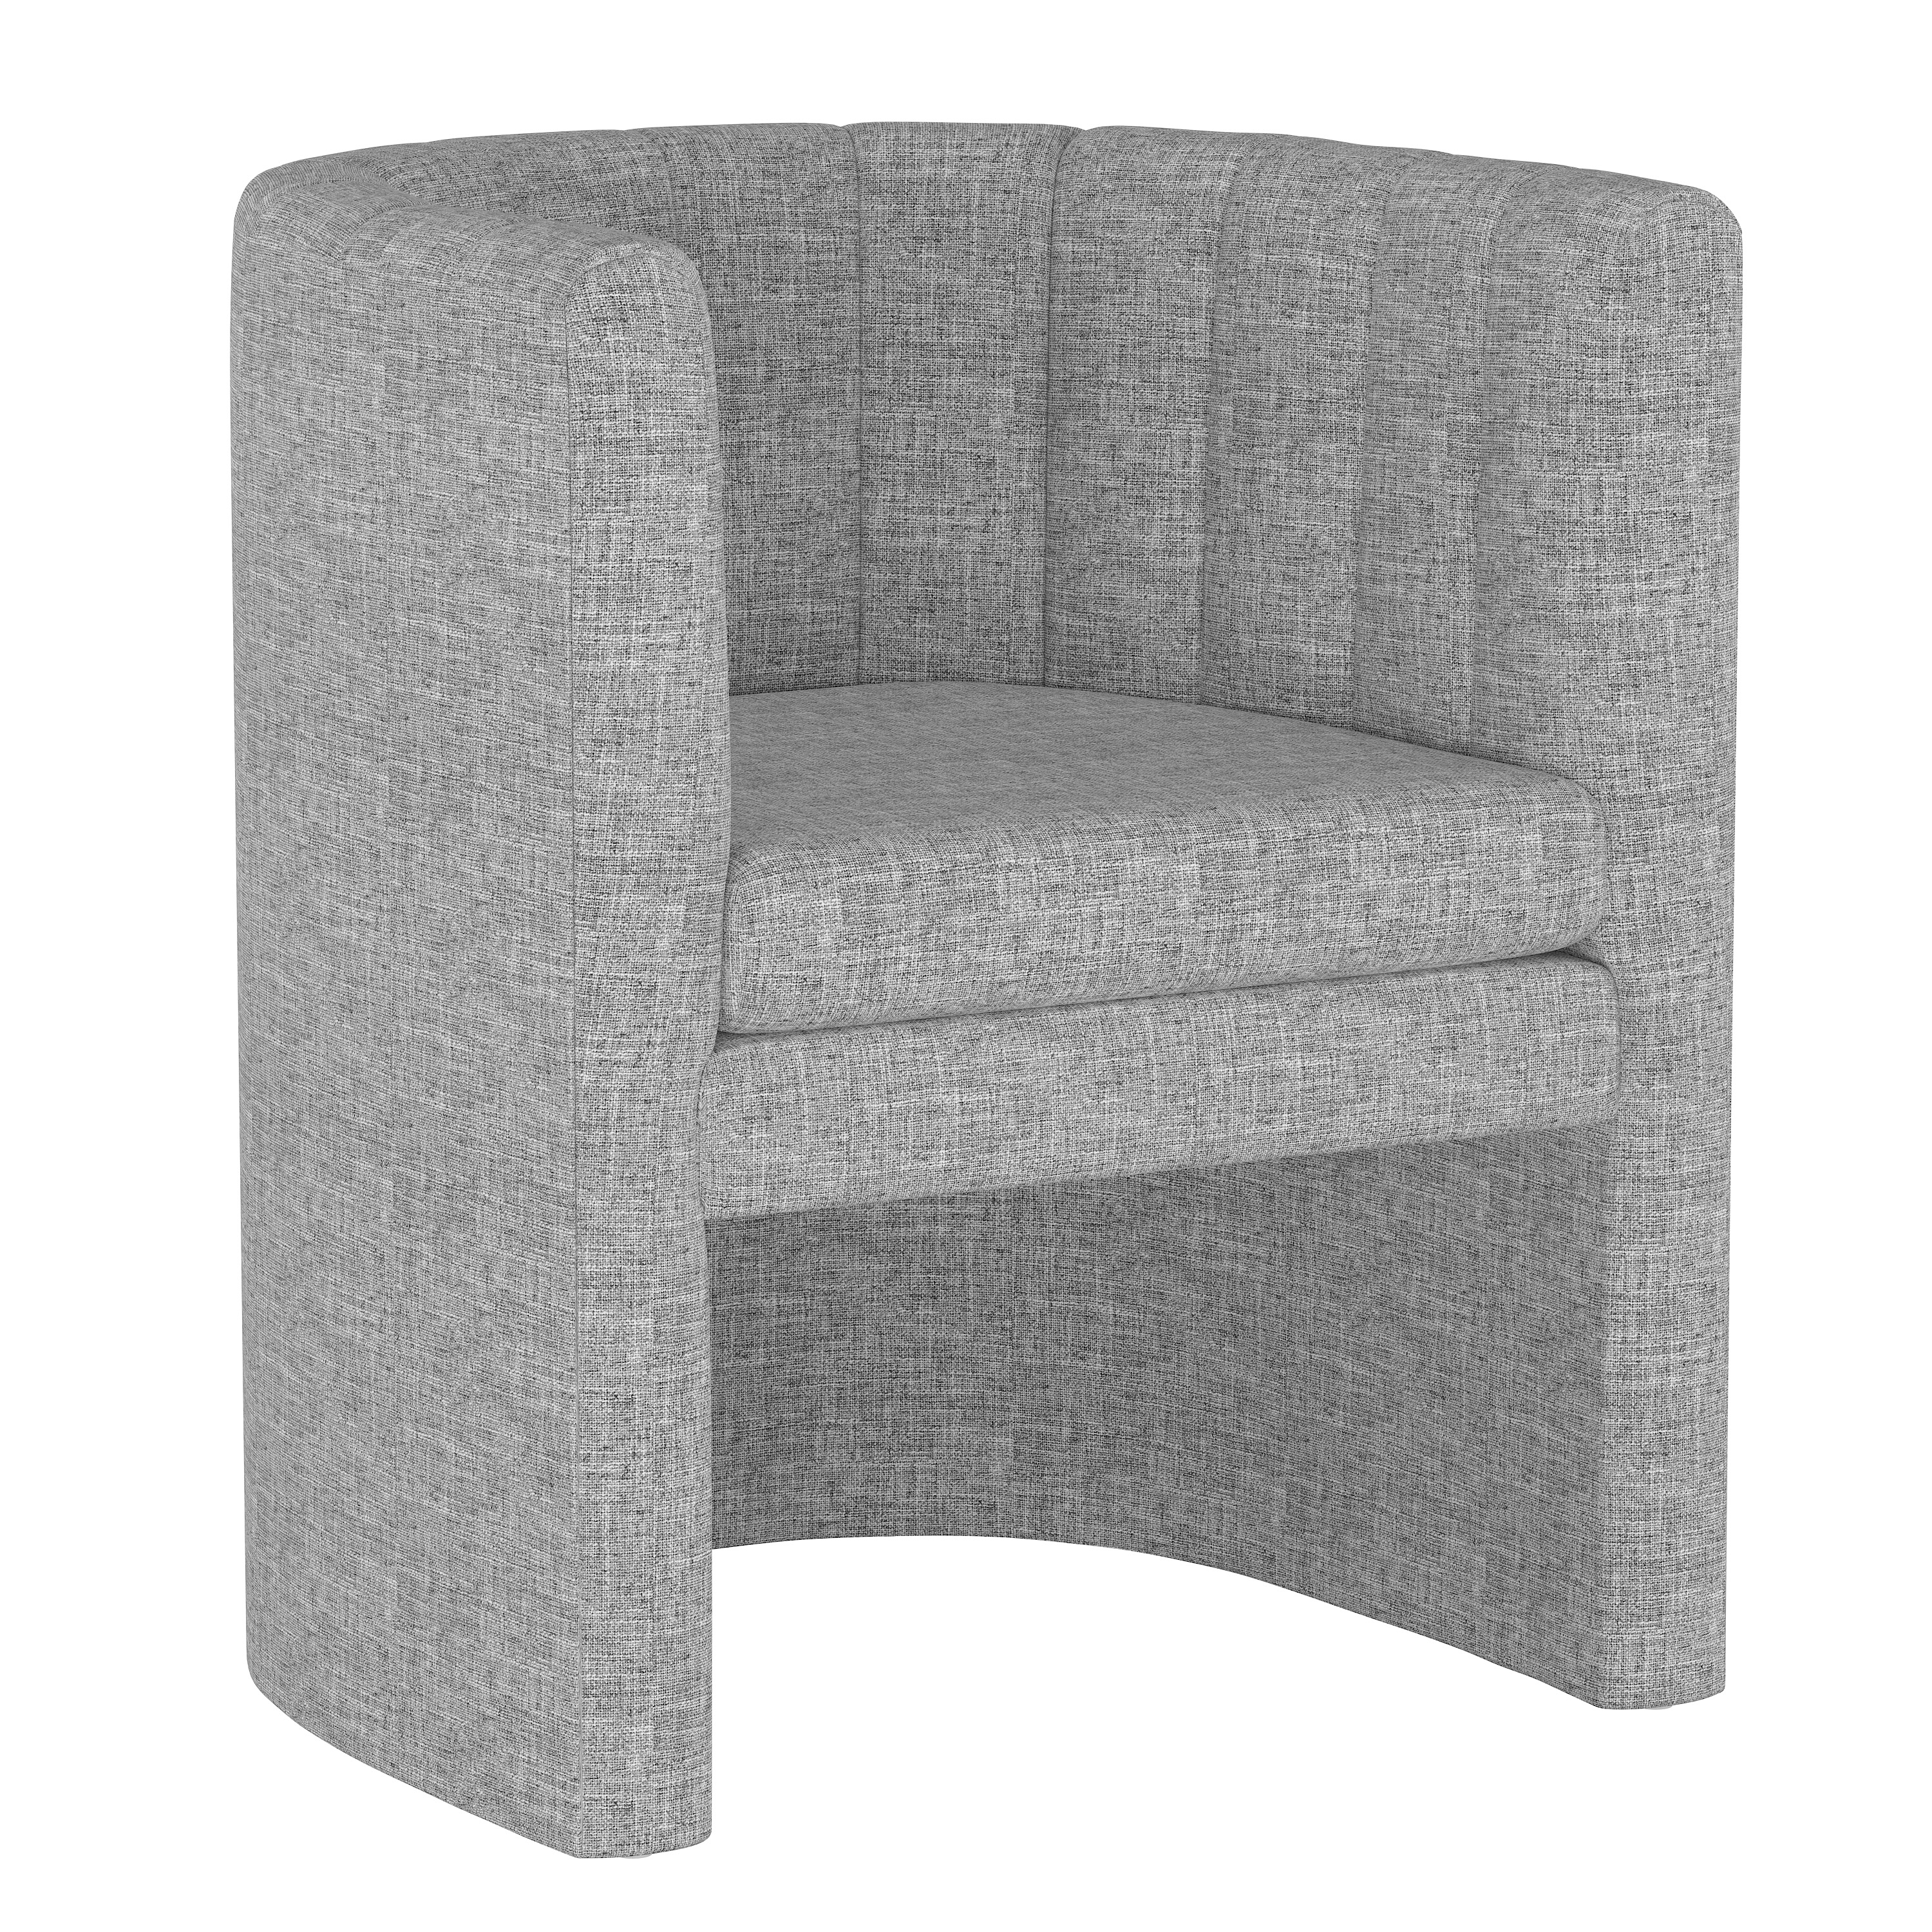 Wellshire Chair, Pumice Linen - Image 0